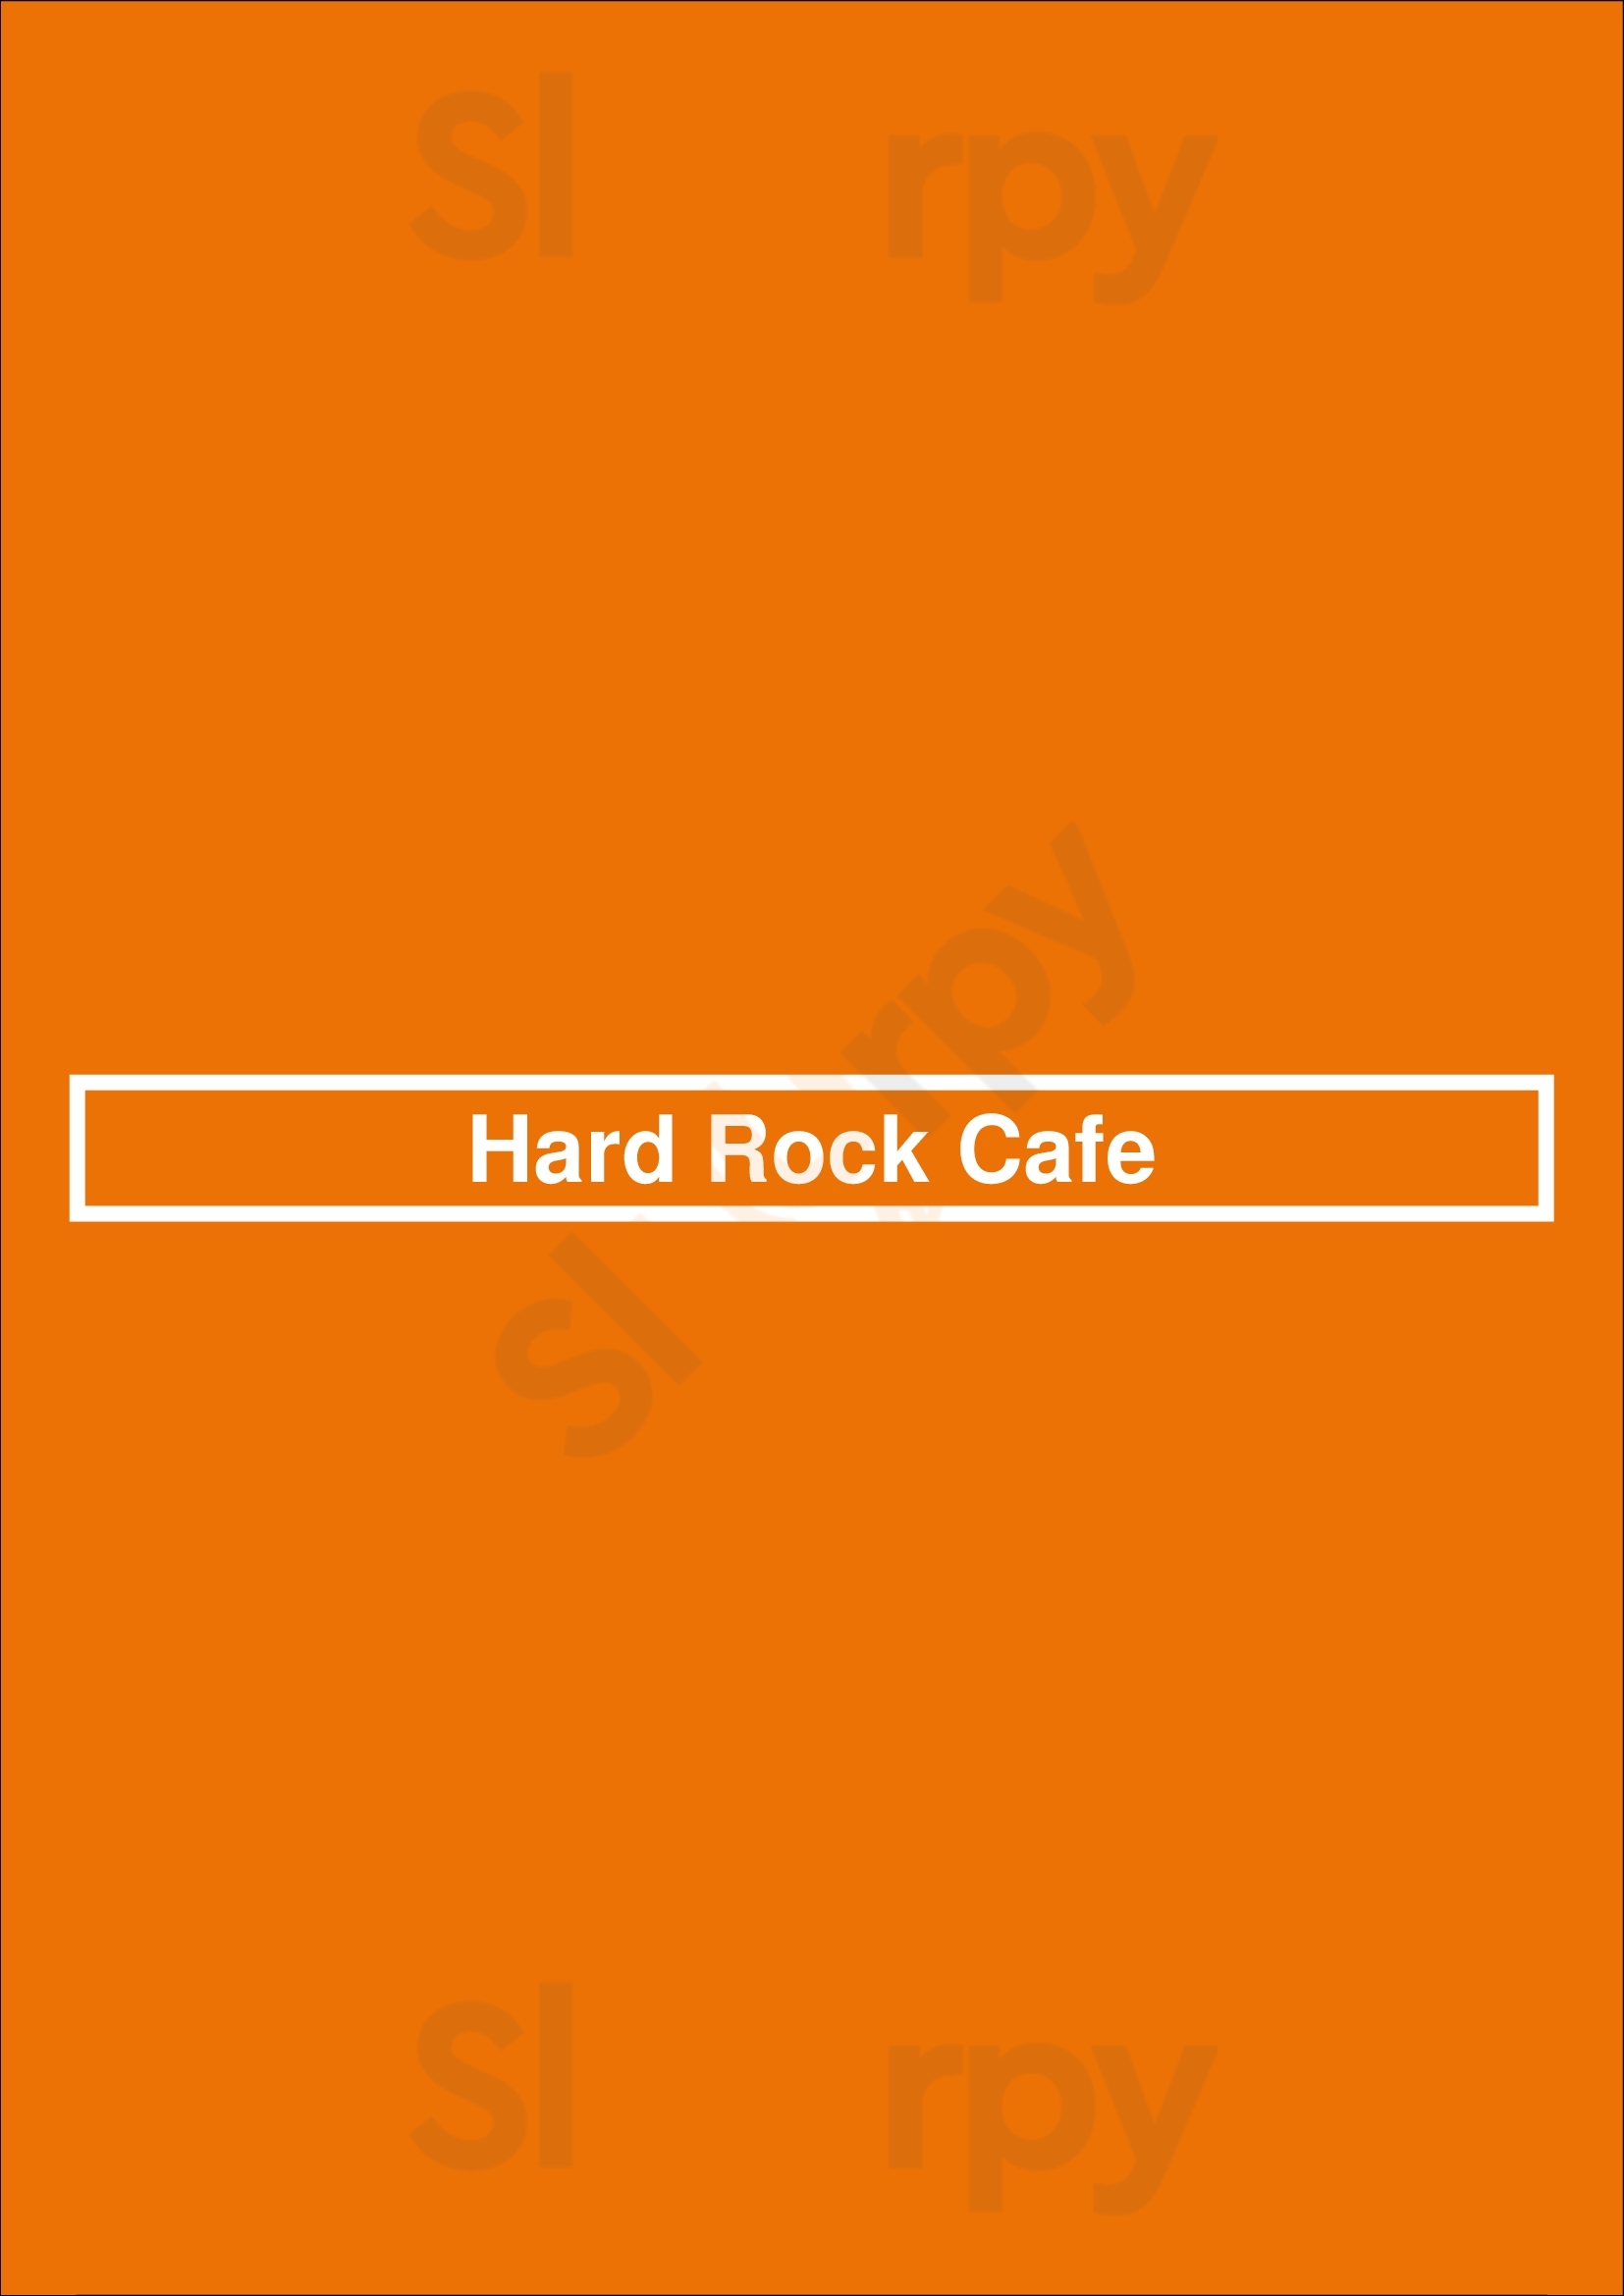 Hard Rock Cafe Berlin Berlin Menu - 1